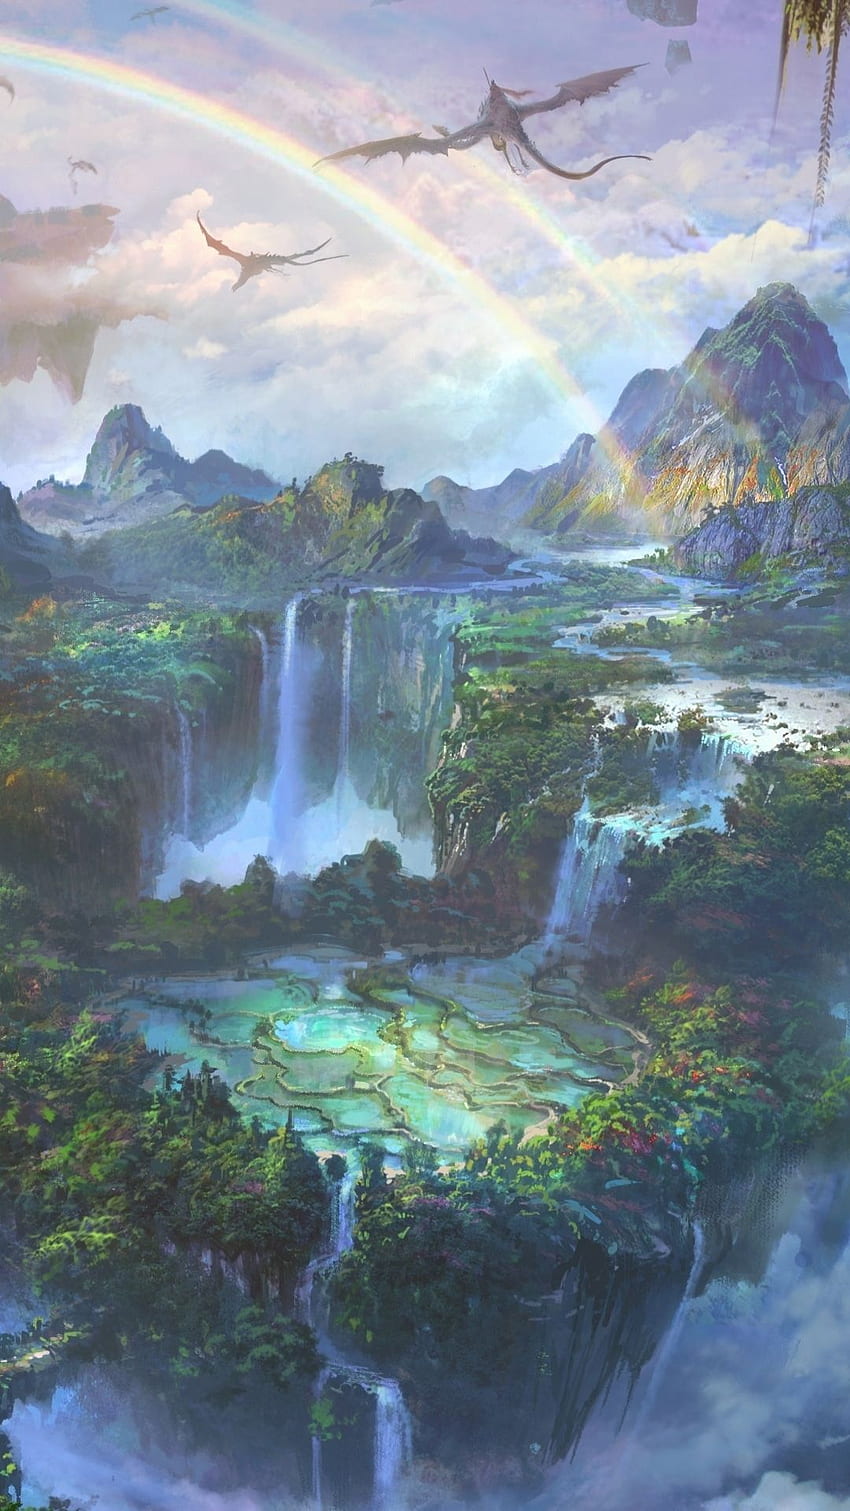 Fantasy Scenery Landscape 4K wallpaper download